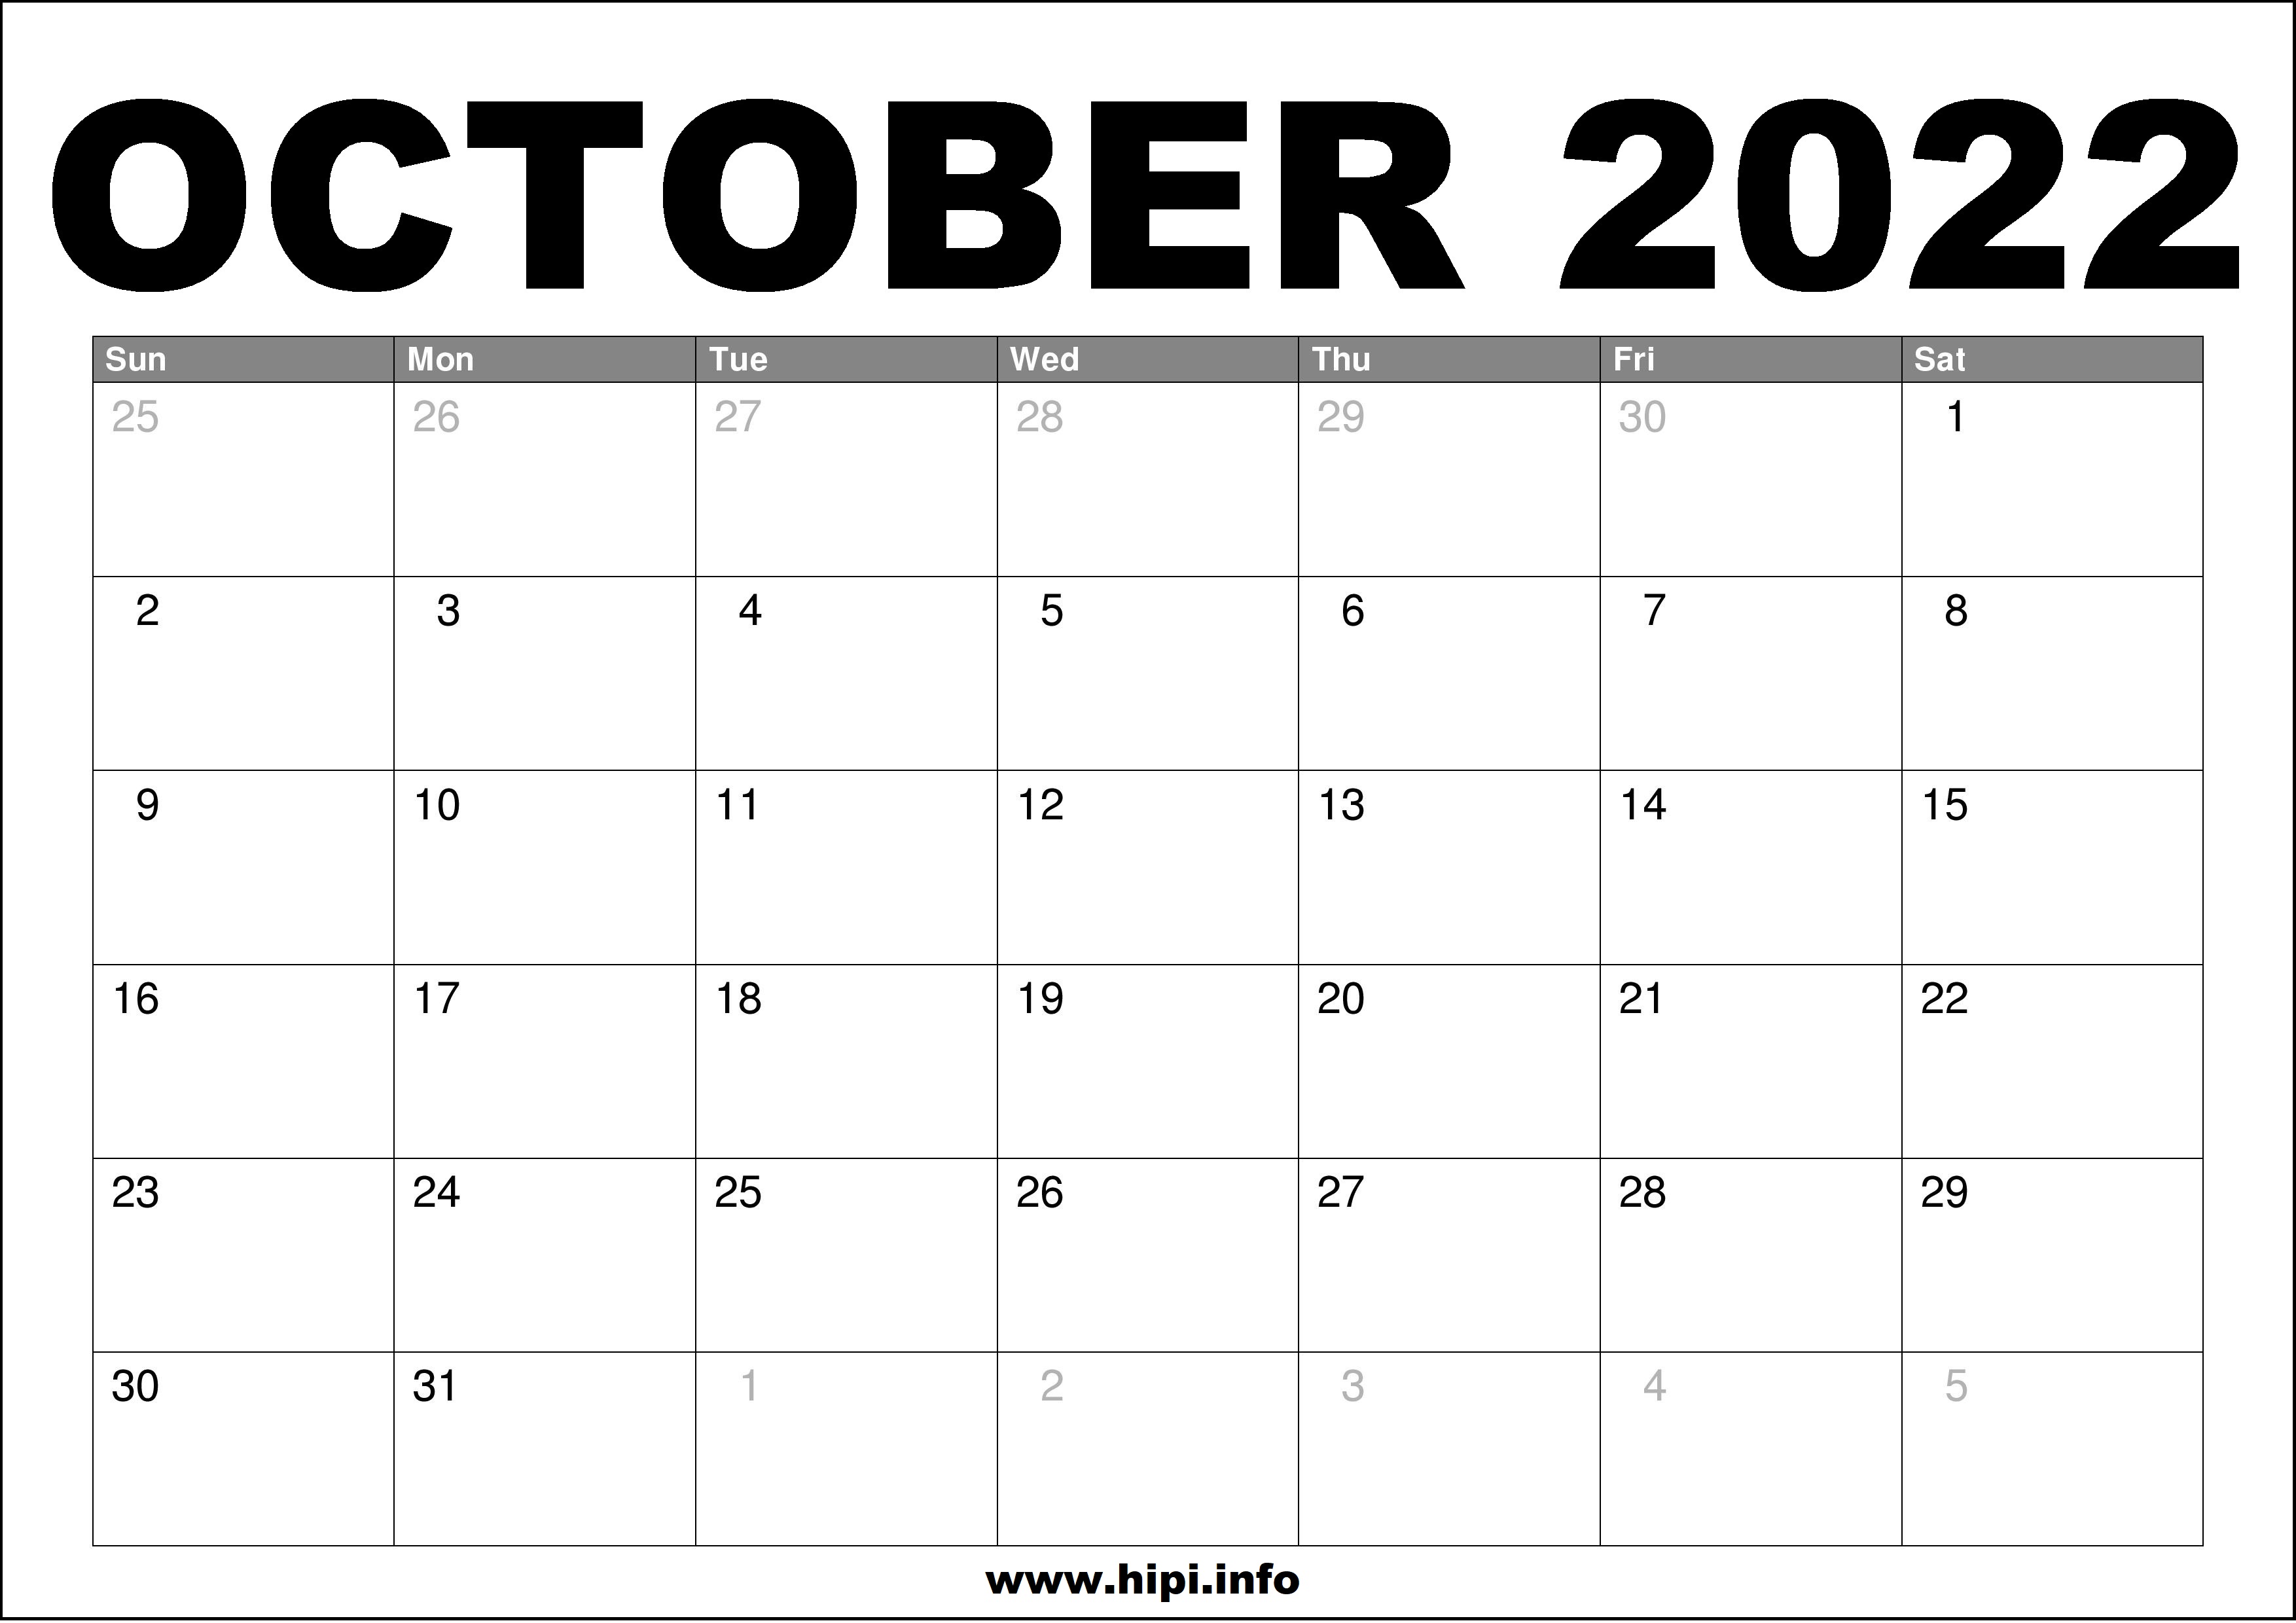 October Calendar To Print 2022 October 2022 Calendar Printable Free - Hipi.info | Calendars Printable Free